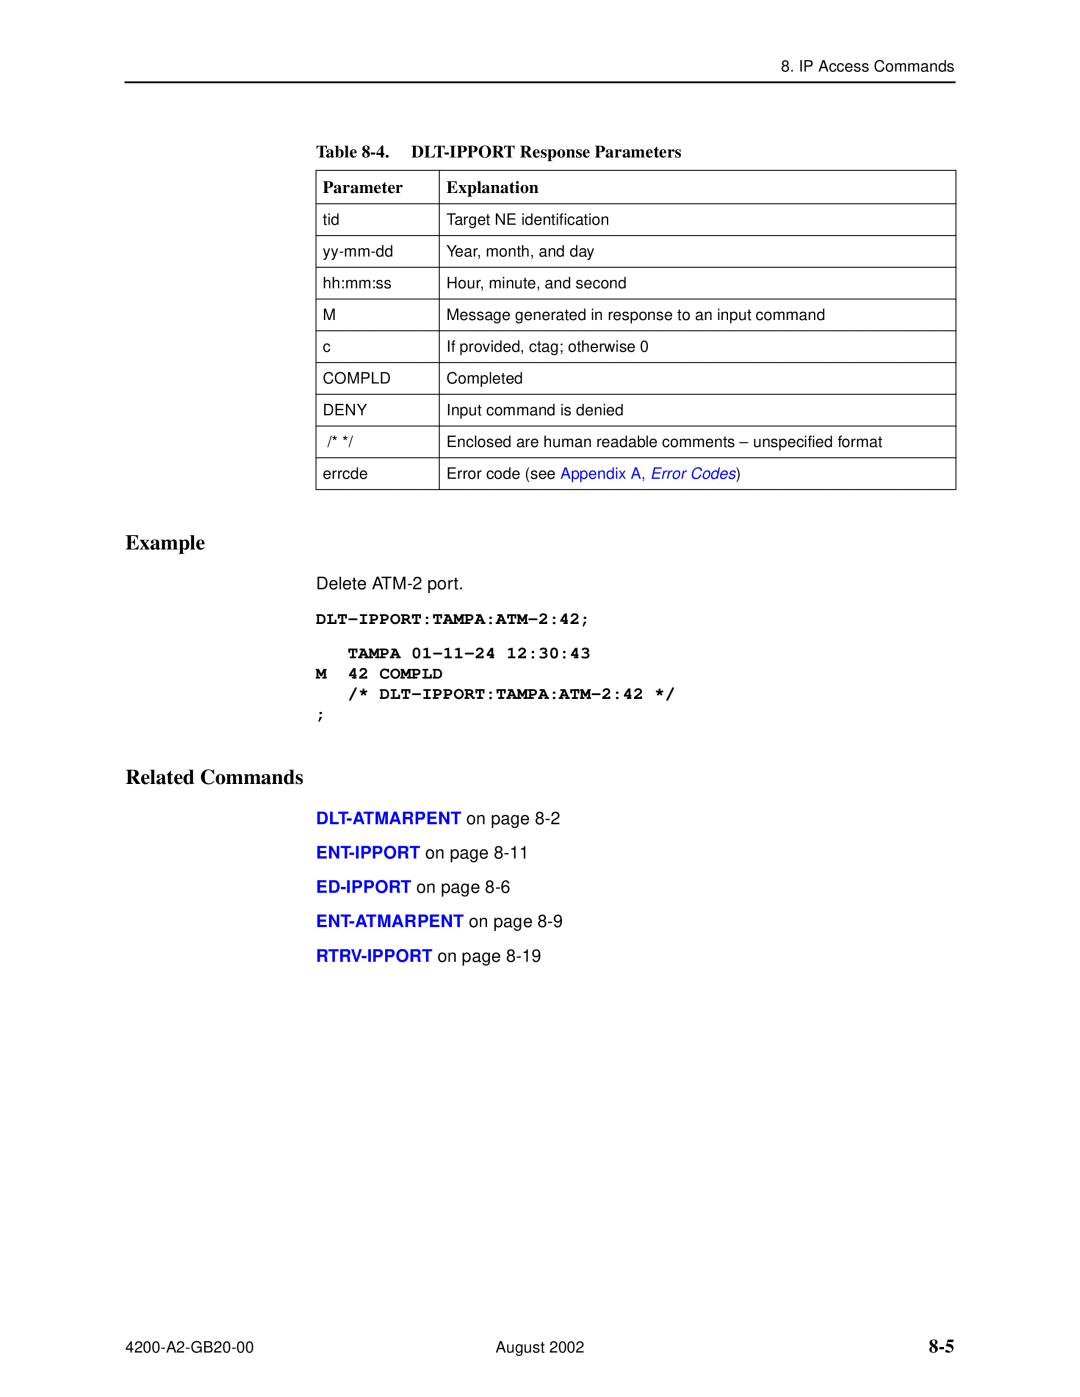 Paradyne 4200 4. DLT-IPPORT Response Parameters, DLT-IPPORTTAMPAATM-242 TAMPA 01-11-24 M 42 COMPLD, DLT-ATMARPENT on page 